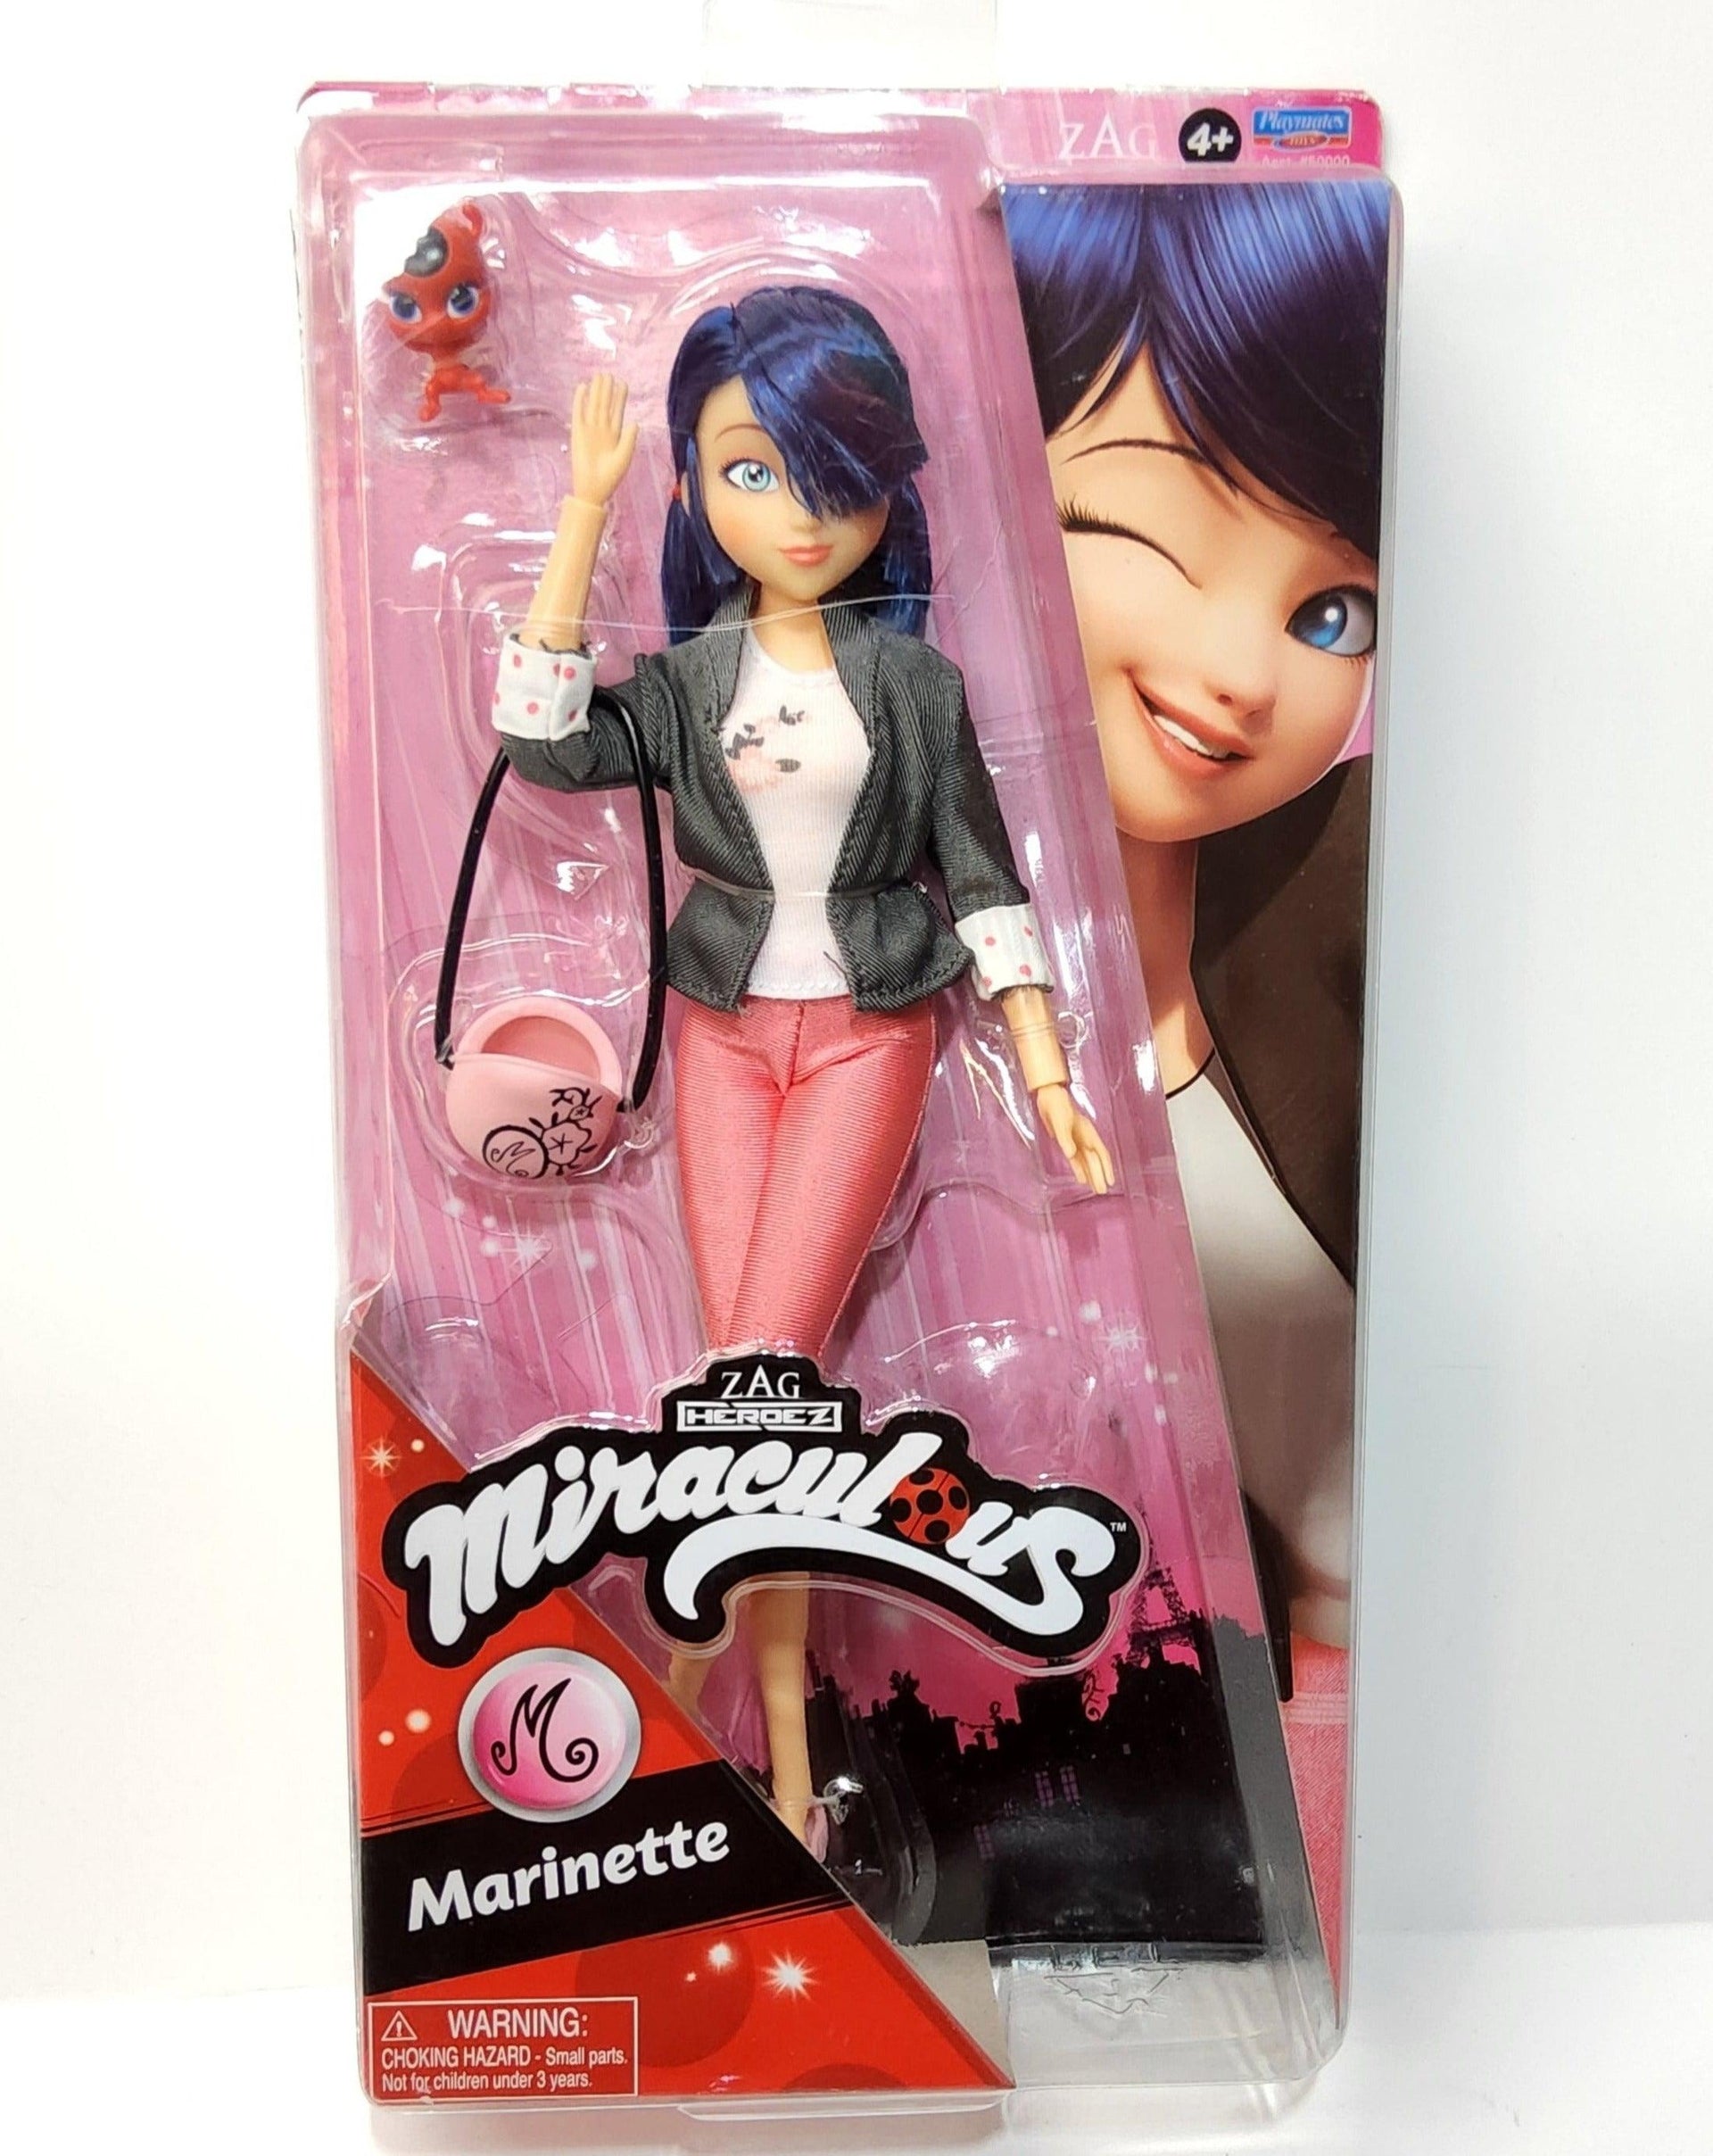 ZAG HEROEZ Miraculous MARINETTE Doll - 10.5 Playmates Toys 2020 Editi